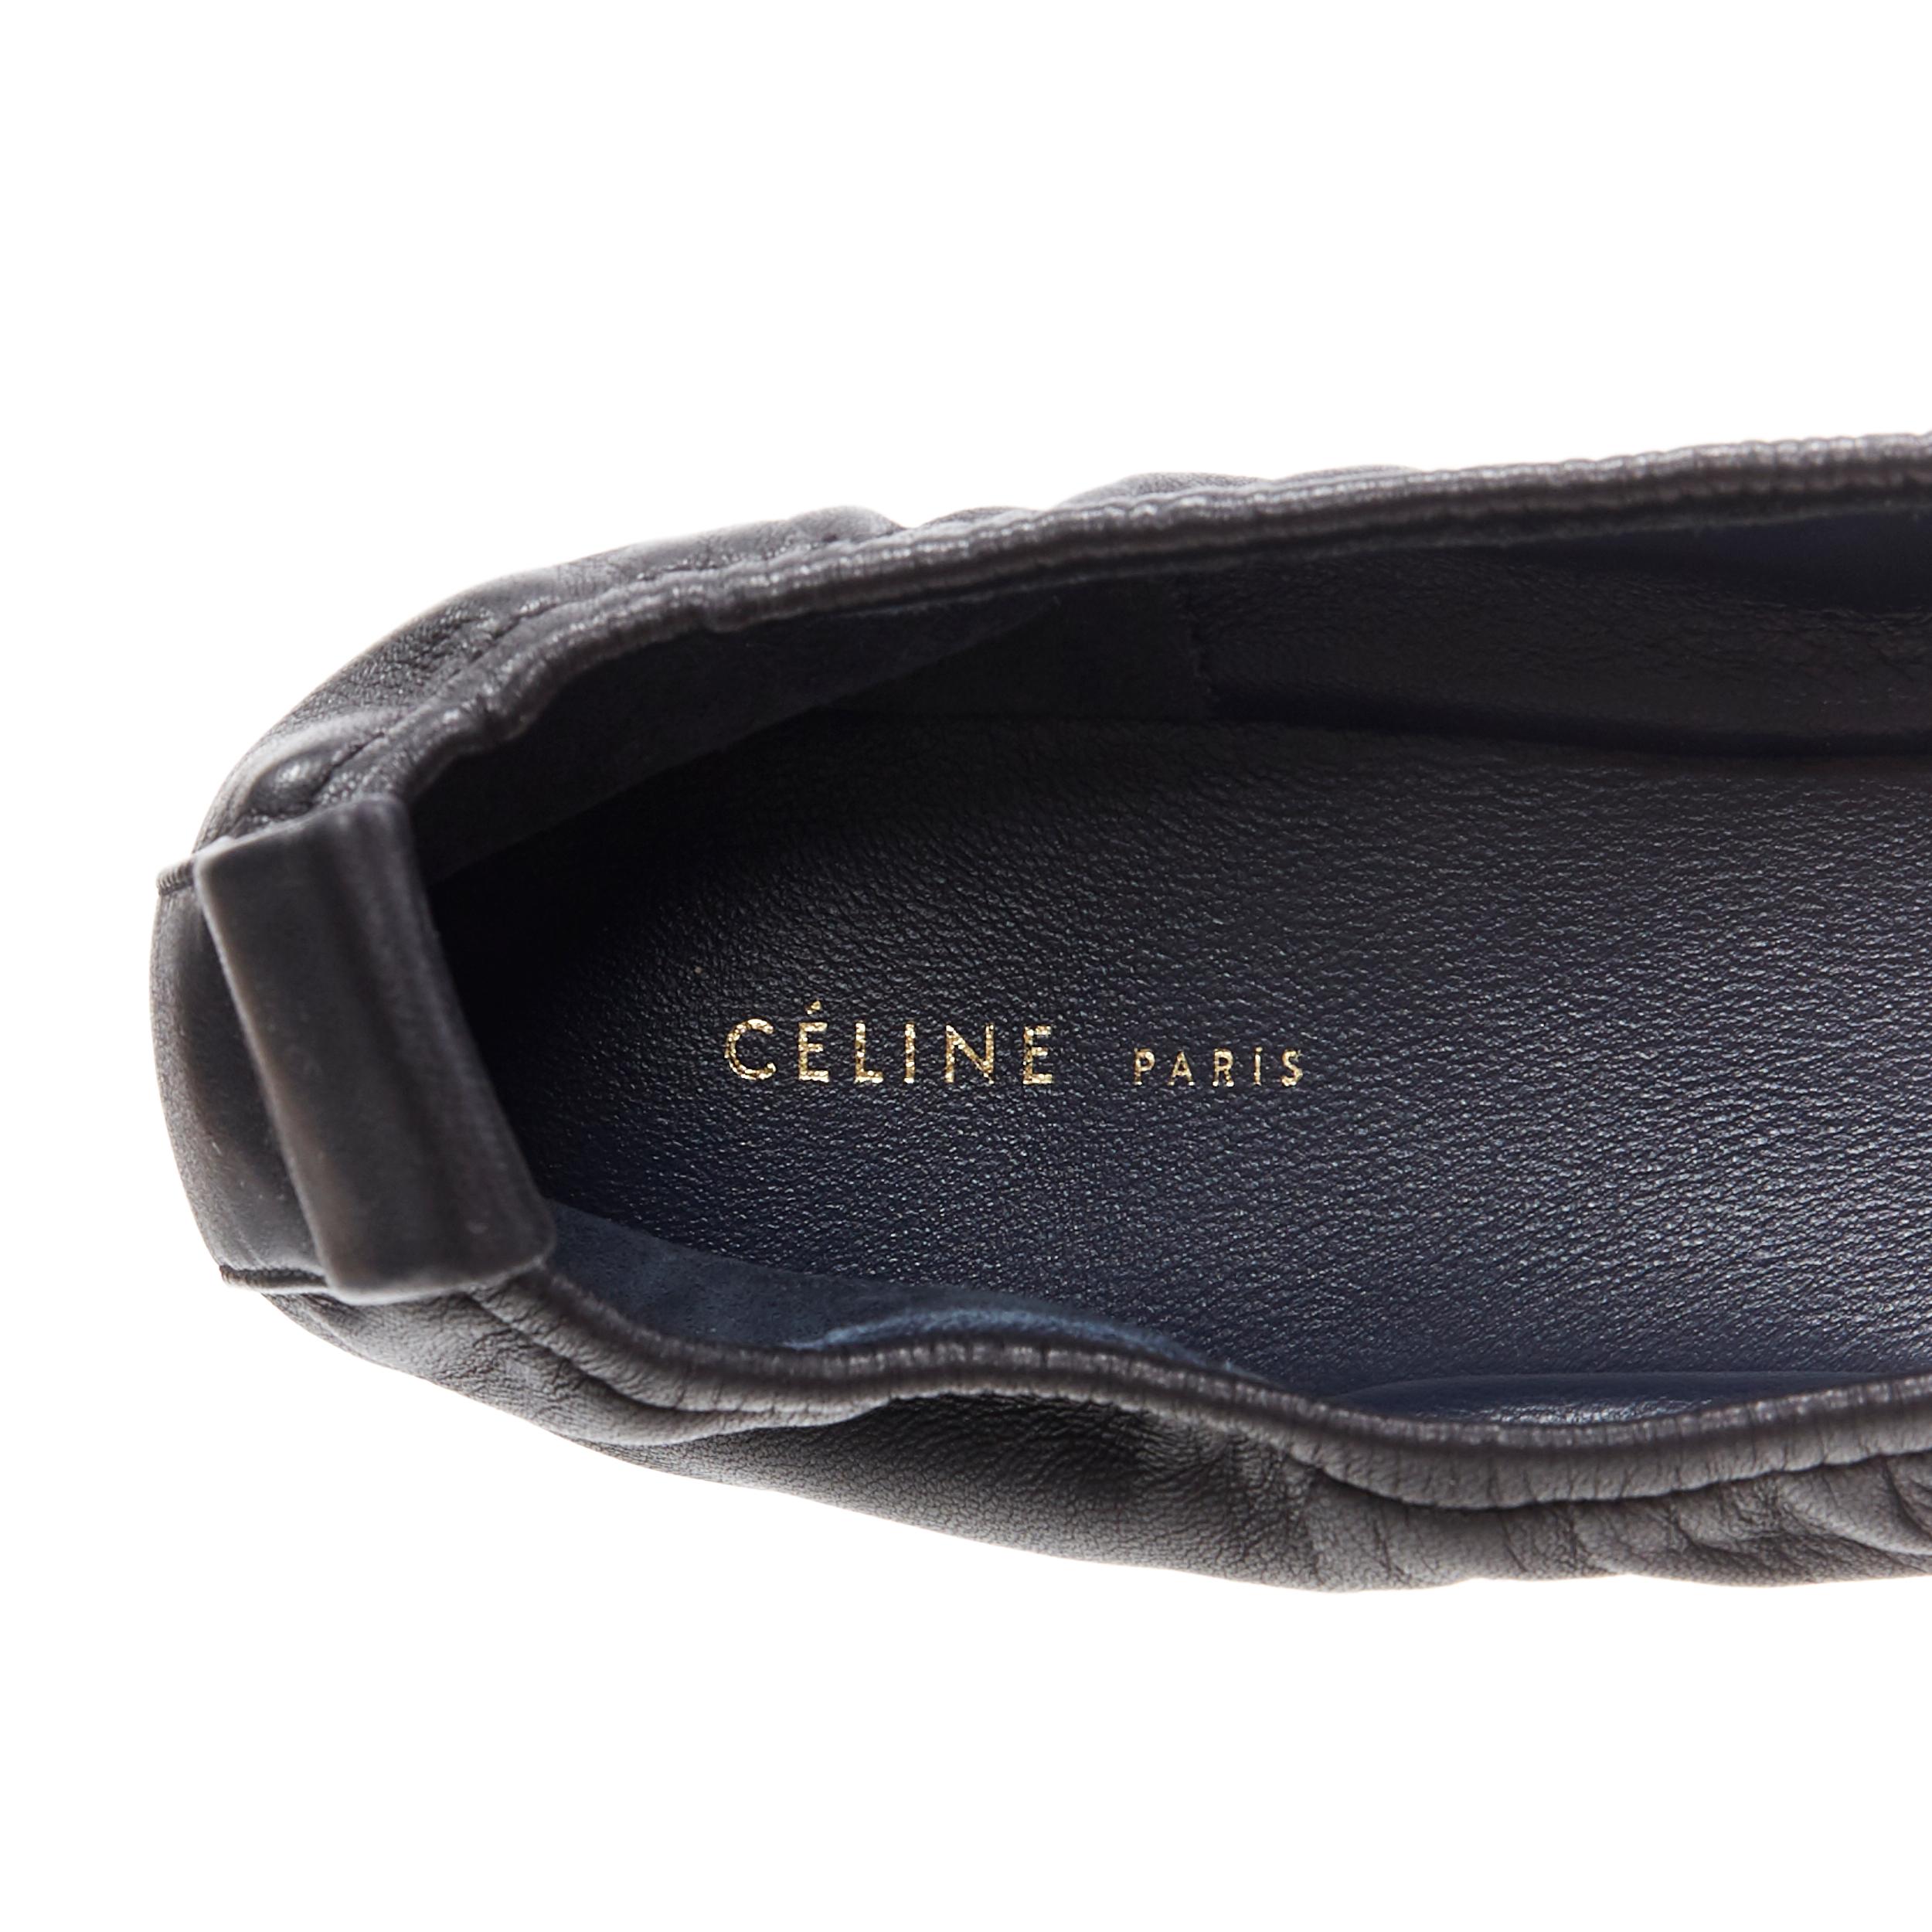 new CELINE PHOEBE PHILO black soft leather round toe ruched ballet flats EU38 2